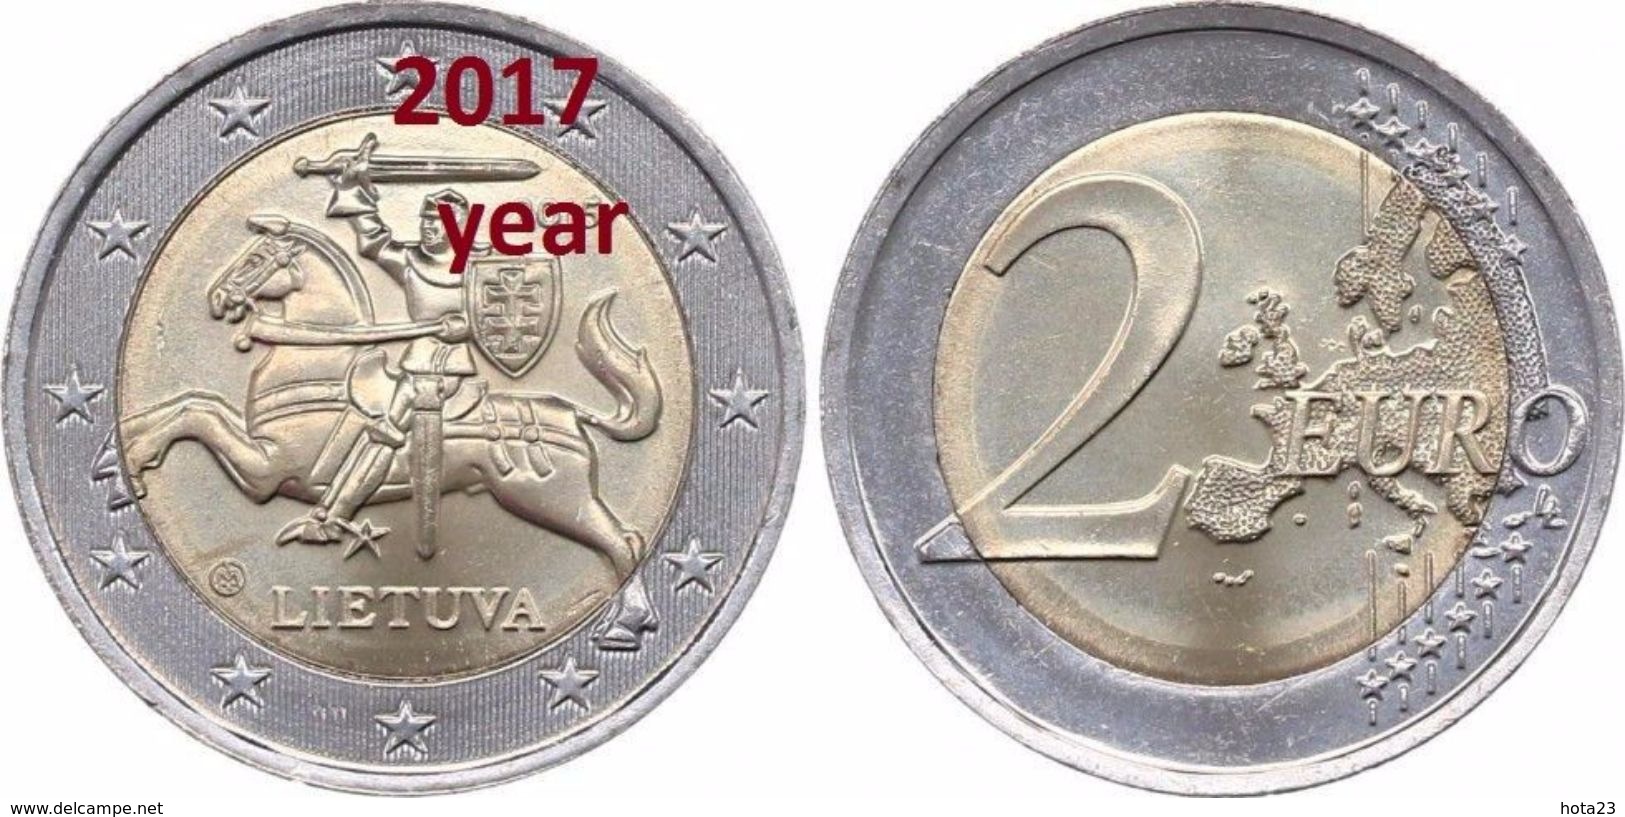 Lithuania Litauen 2017 2 Euro Kursmünze UNC RRR RARE Coin - Rare Keydate FROM MINT ROLL UNC - Lituanie